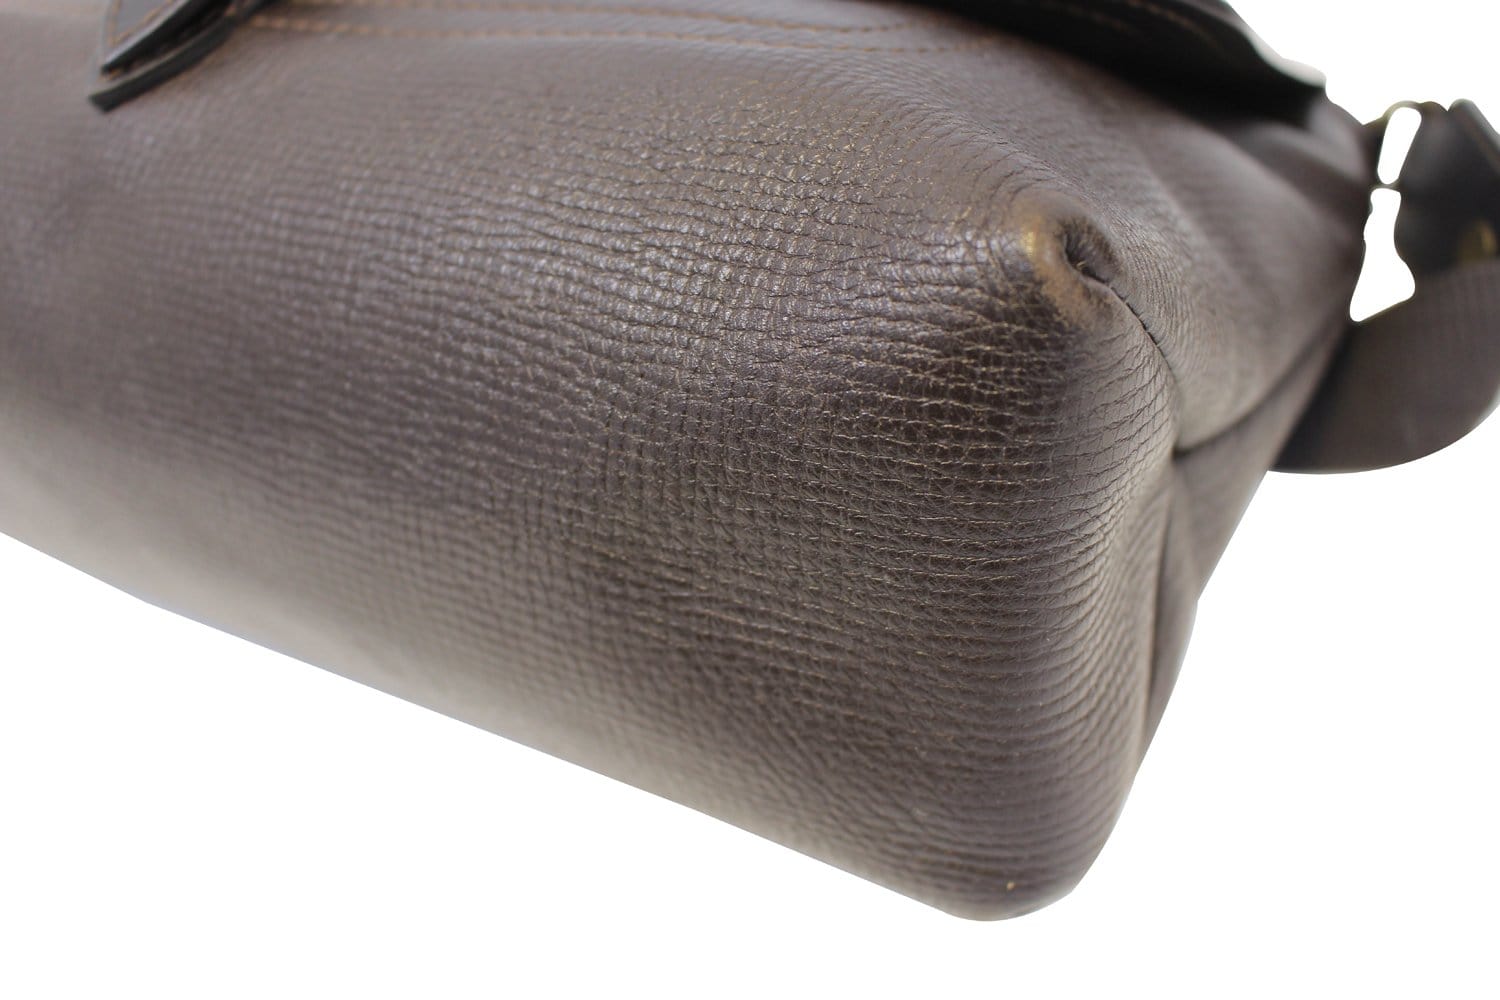 Louis Vuitton Brown Utah Leather Comanche Duffle Bag by WP